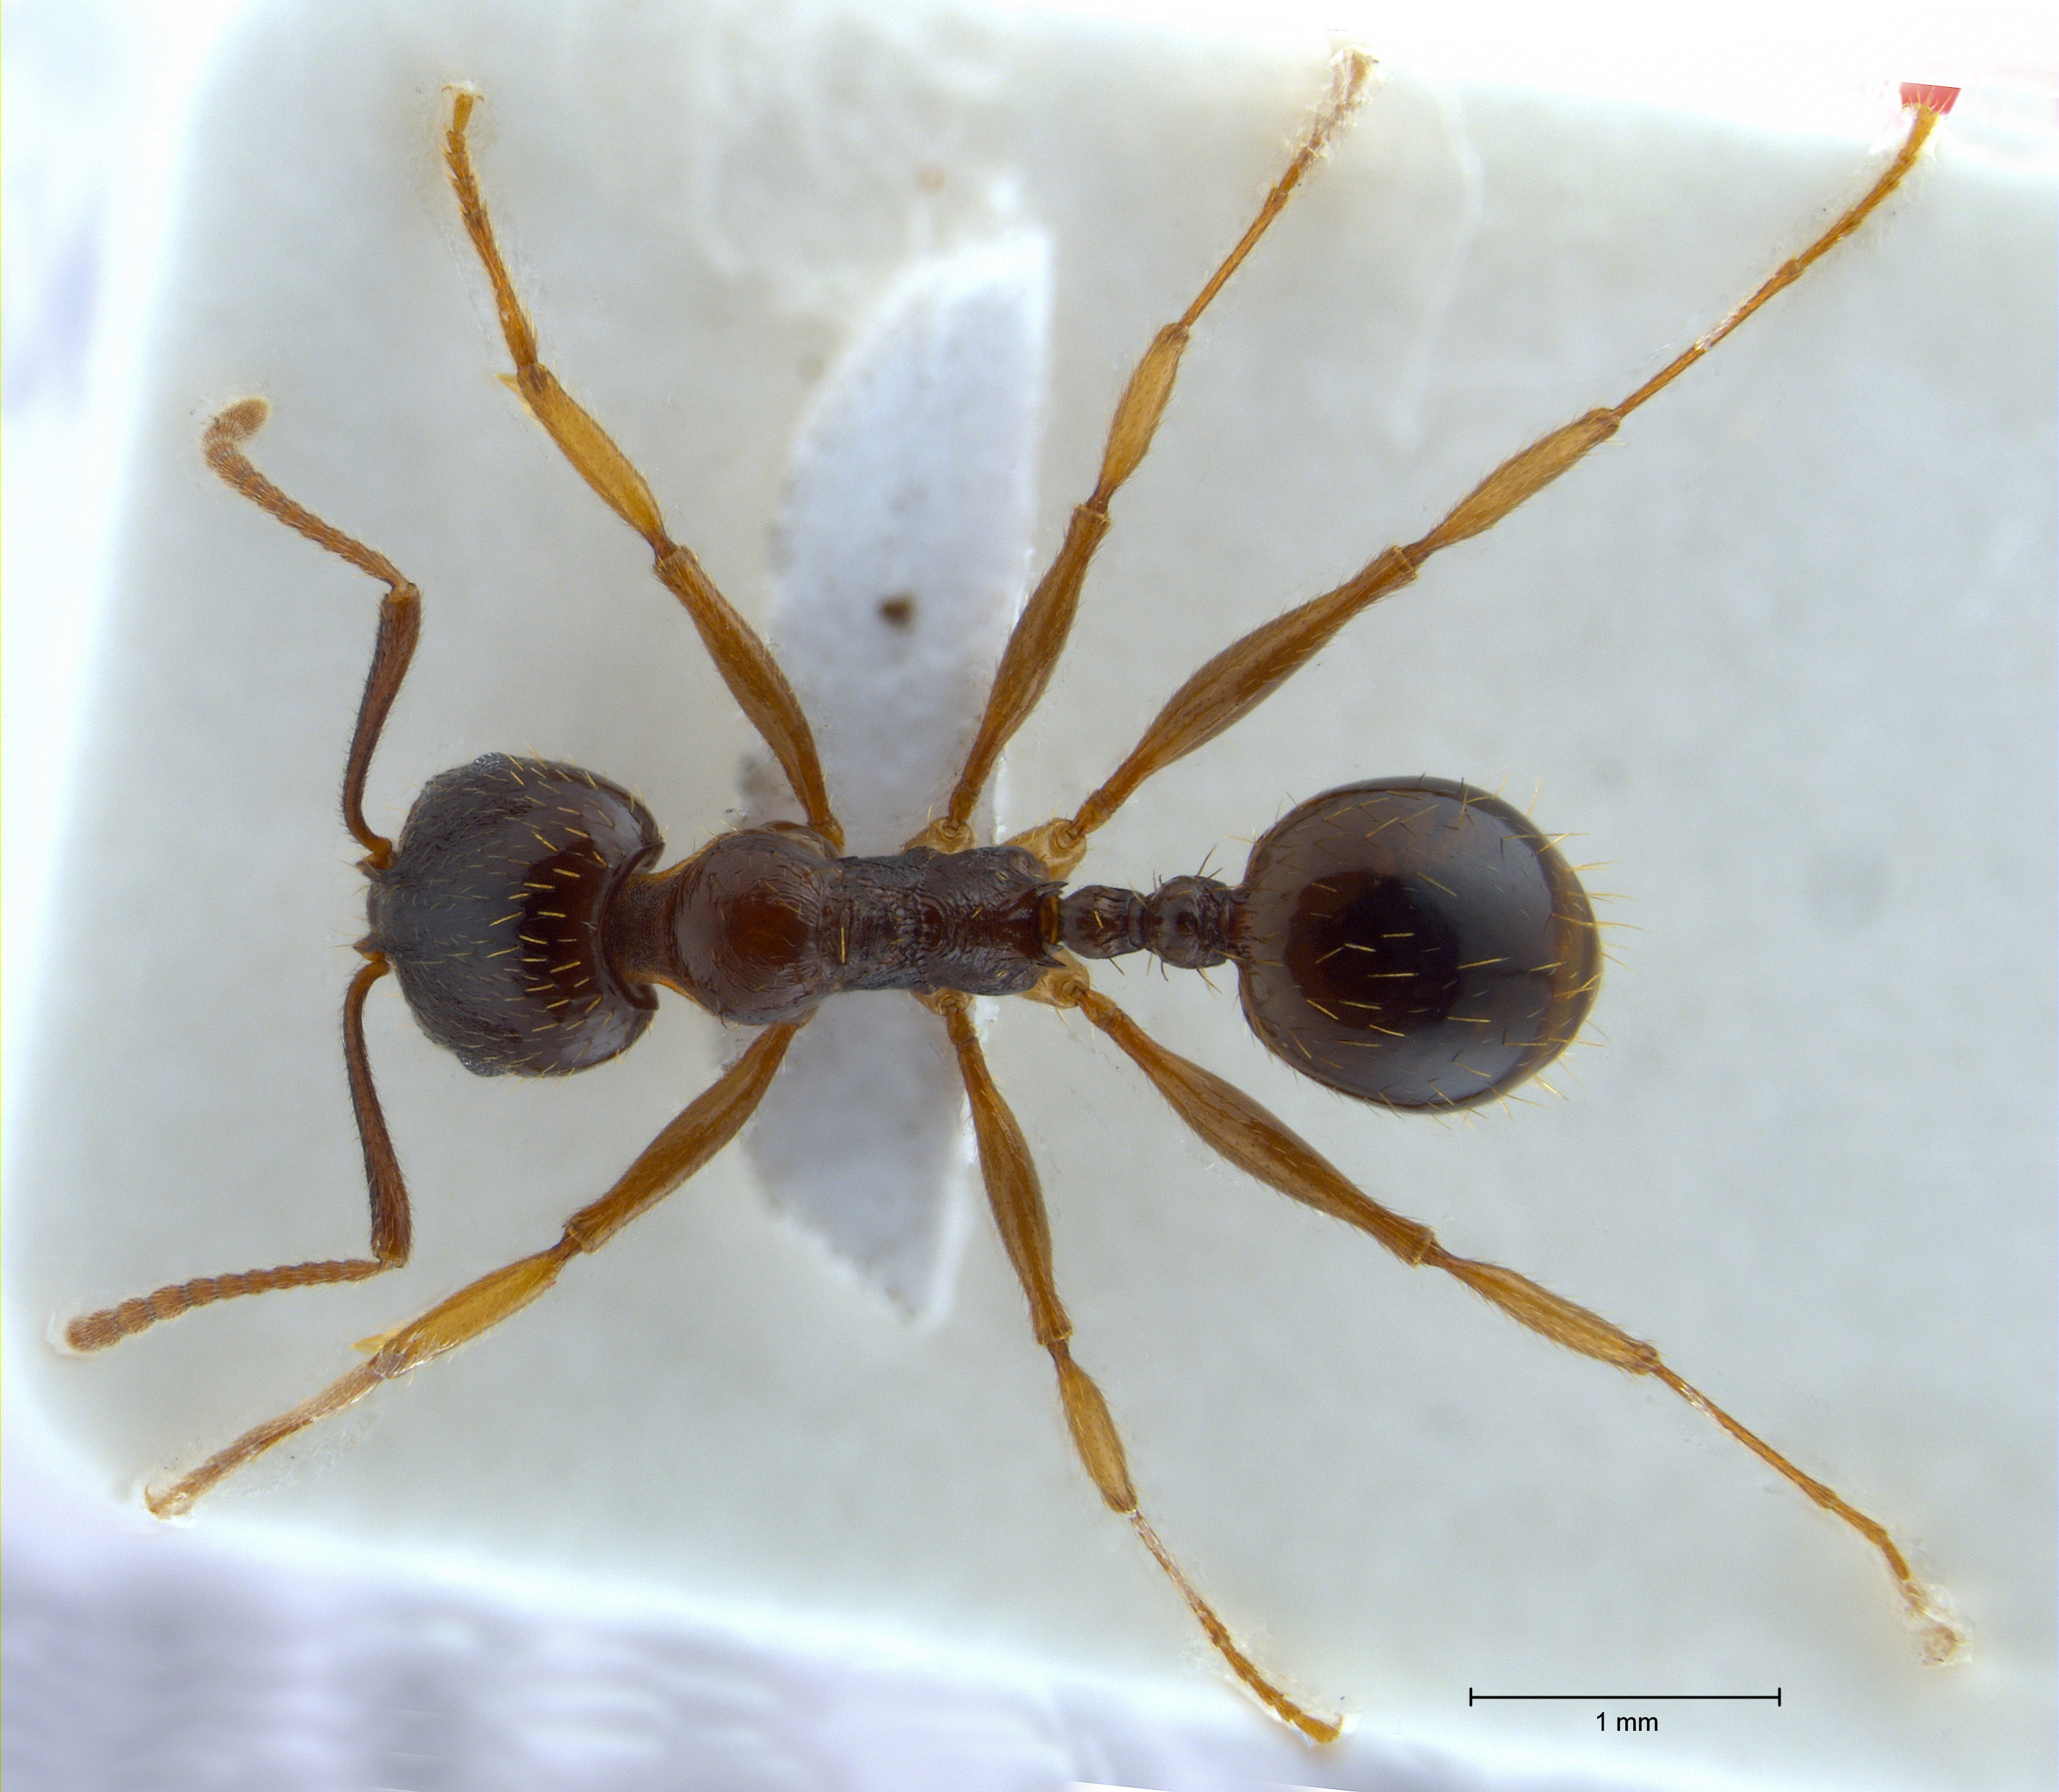 Aphaenogaster subterranea dorsal